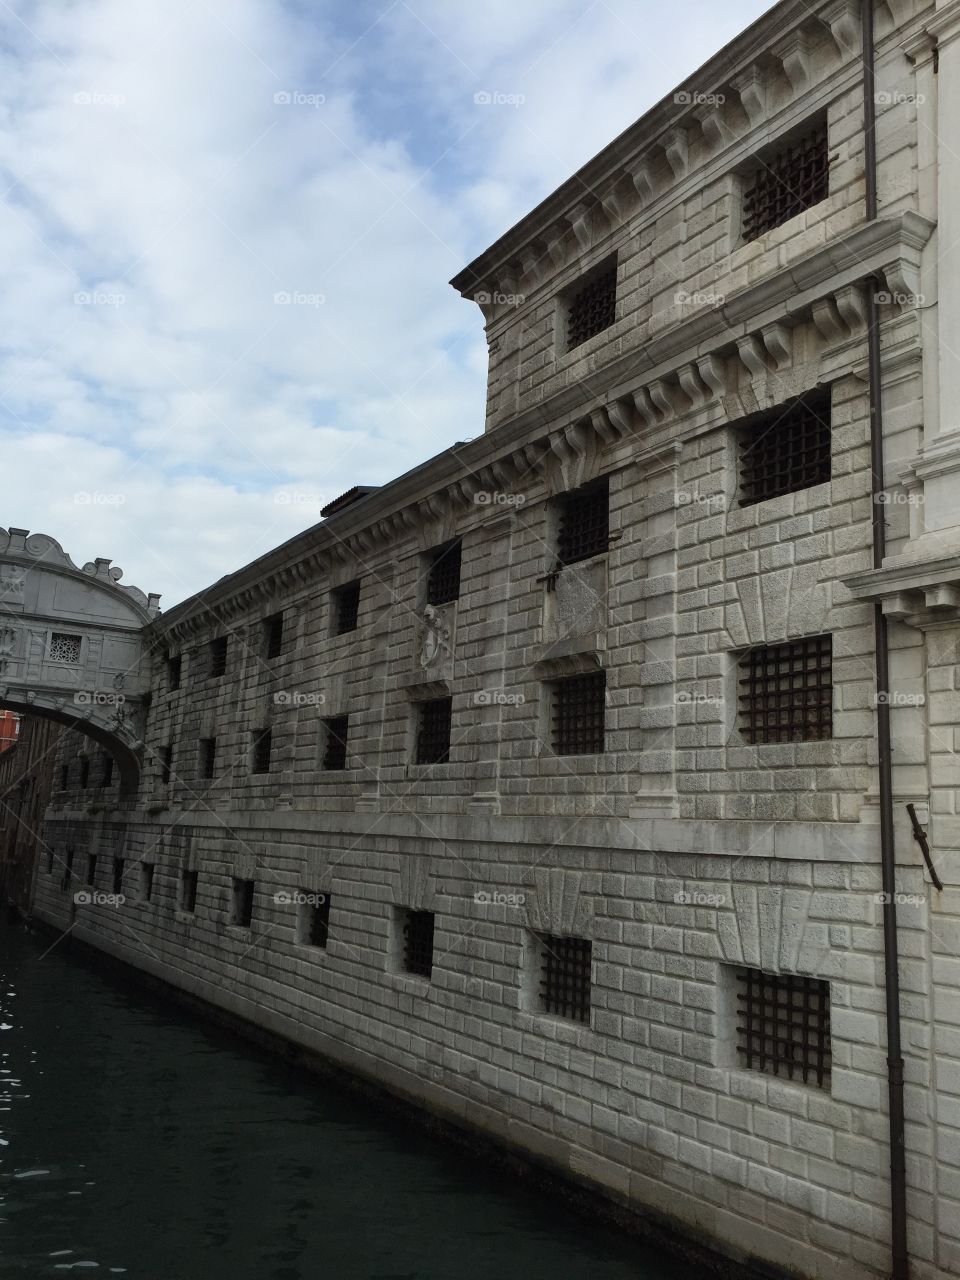 Old Jail House. Venice, Italy